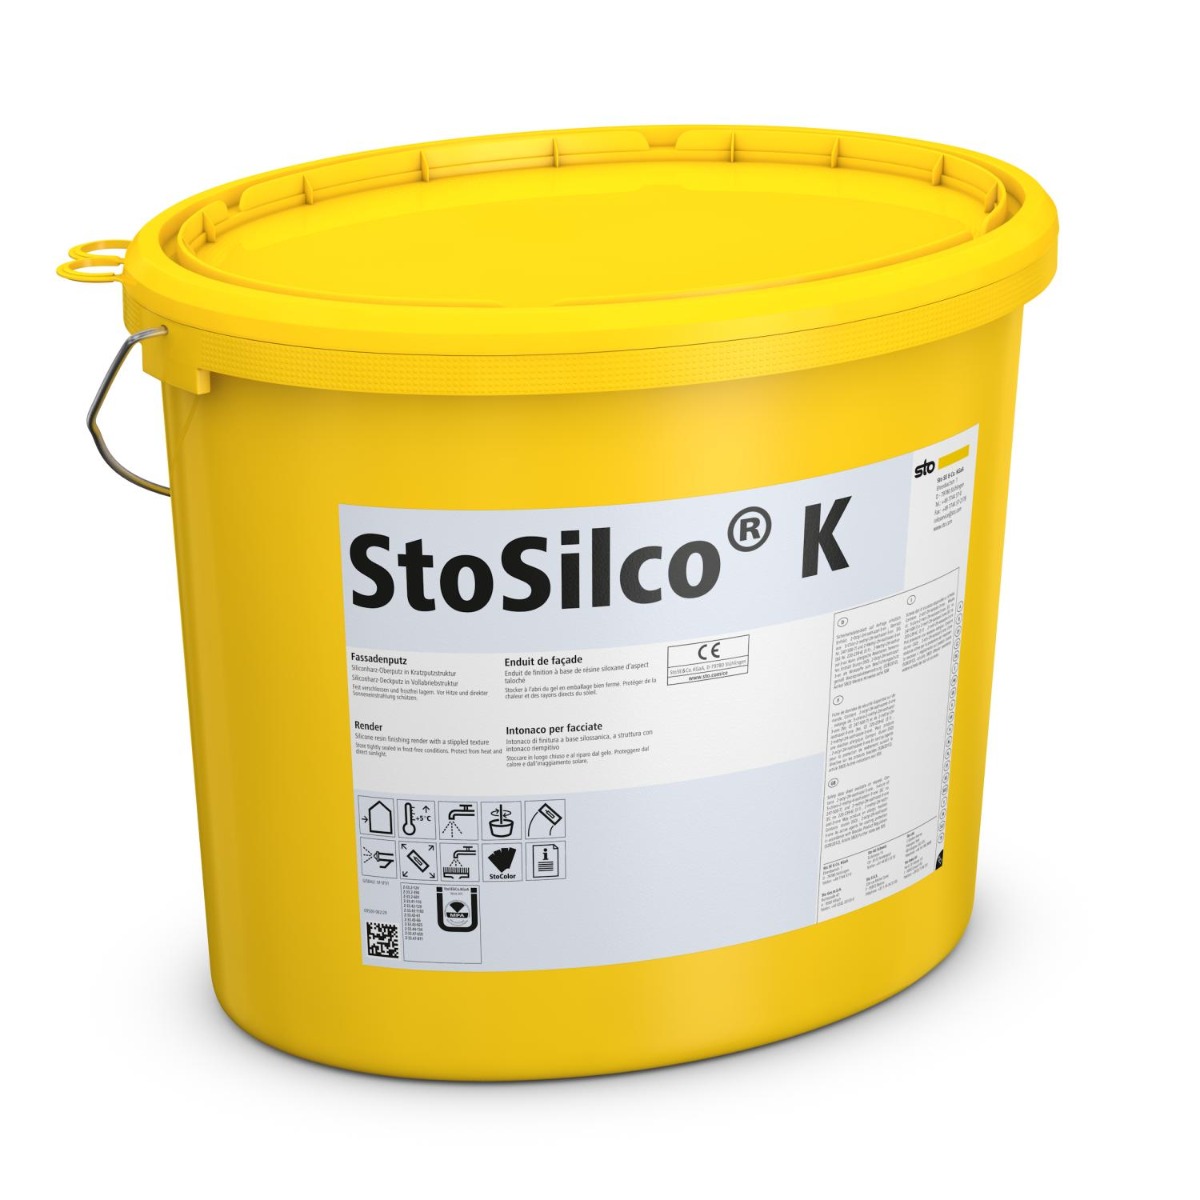 StoSilco QS K-25 kg Korn 1,5-Farbtonklasse III 